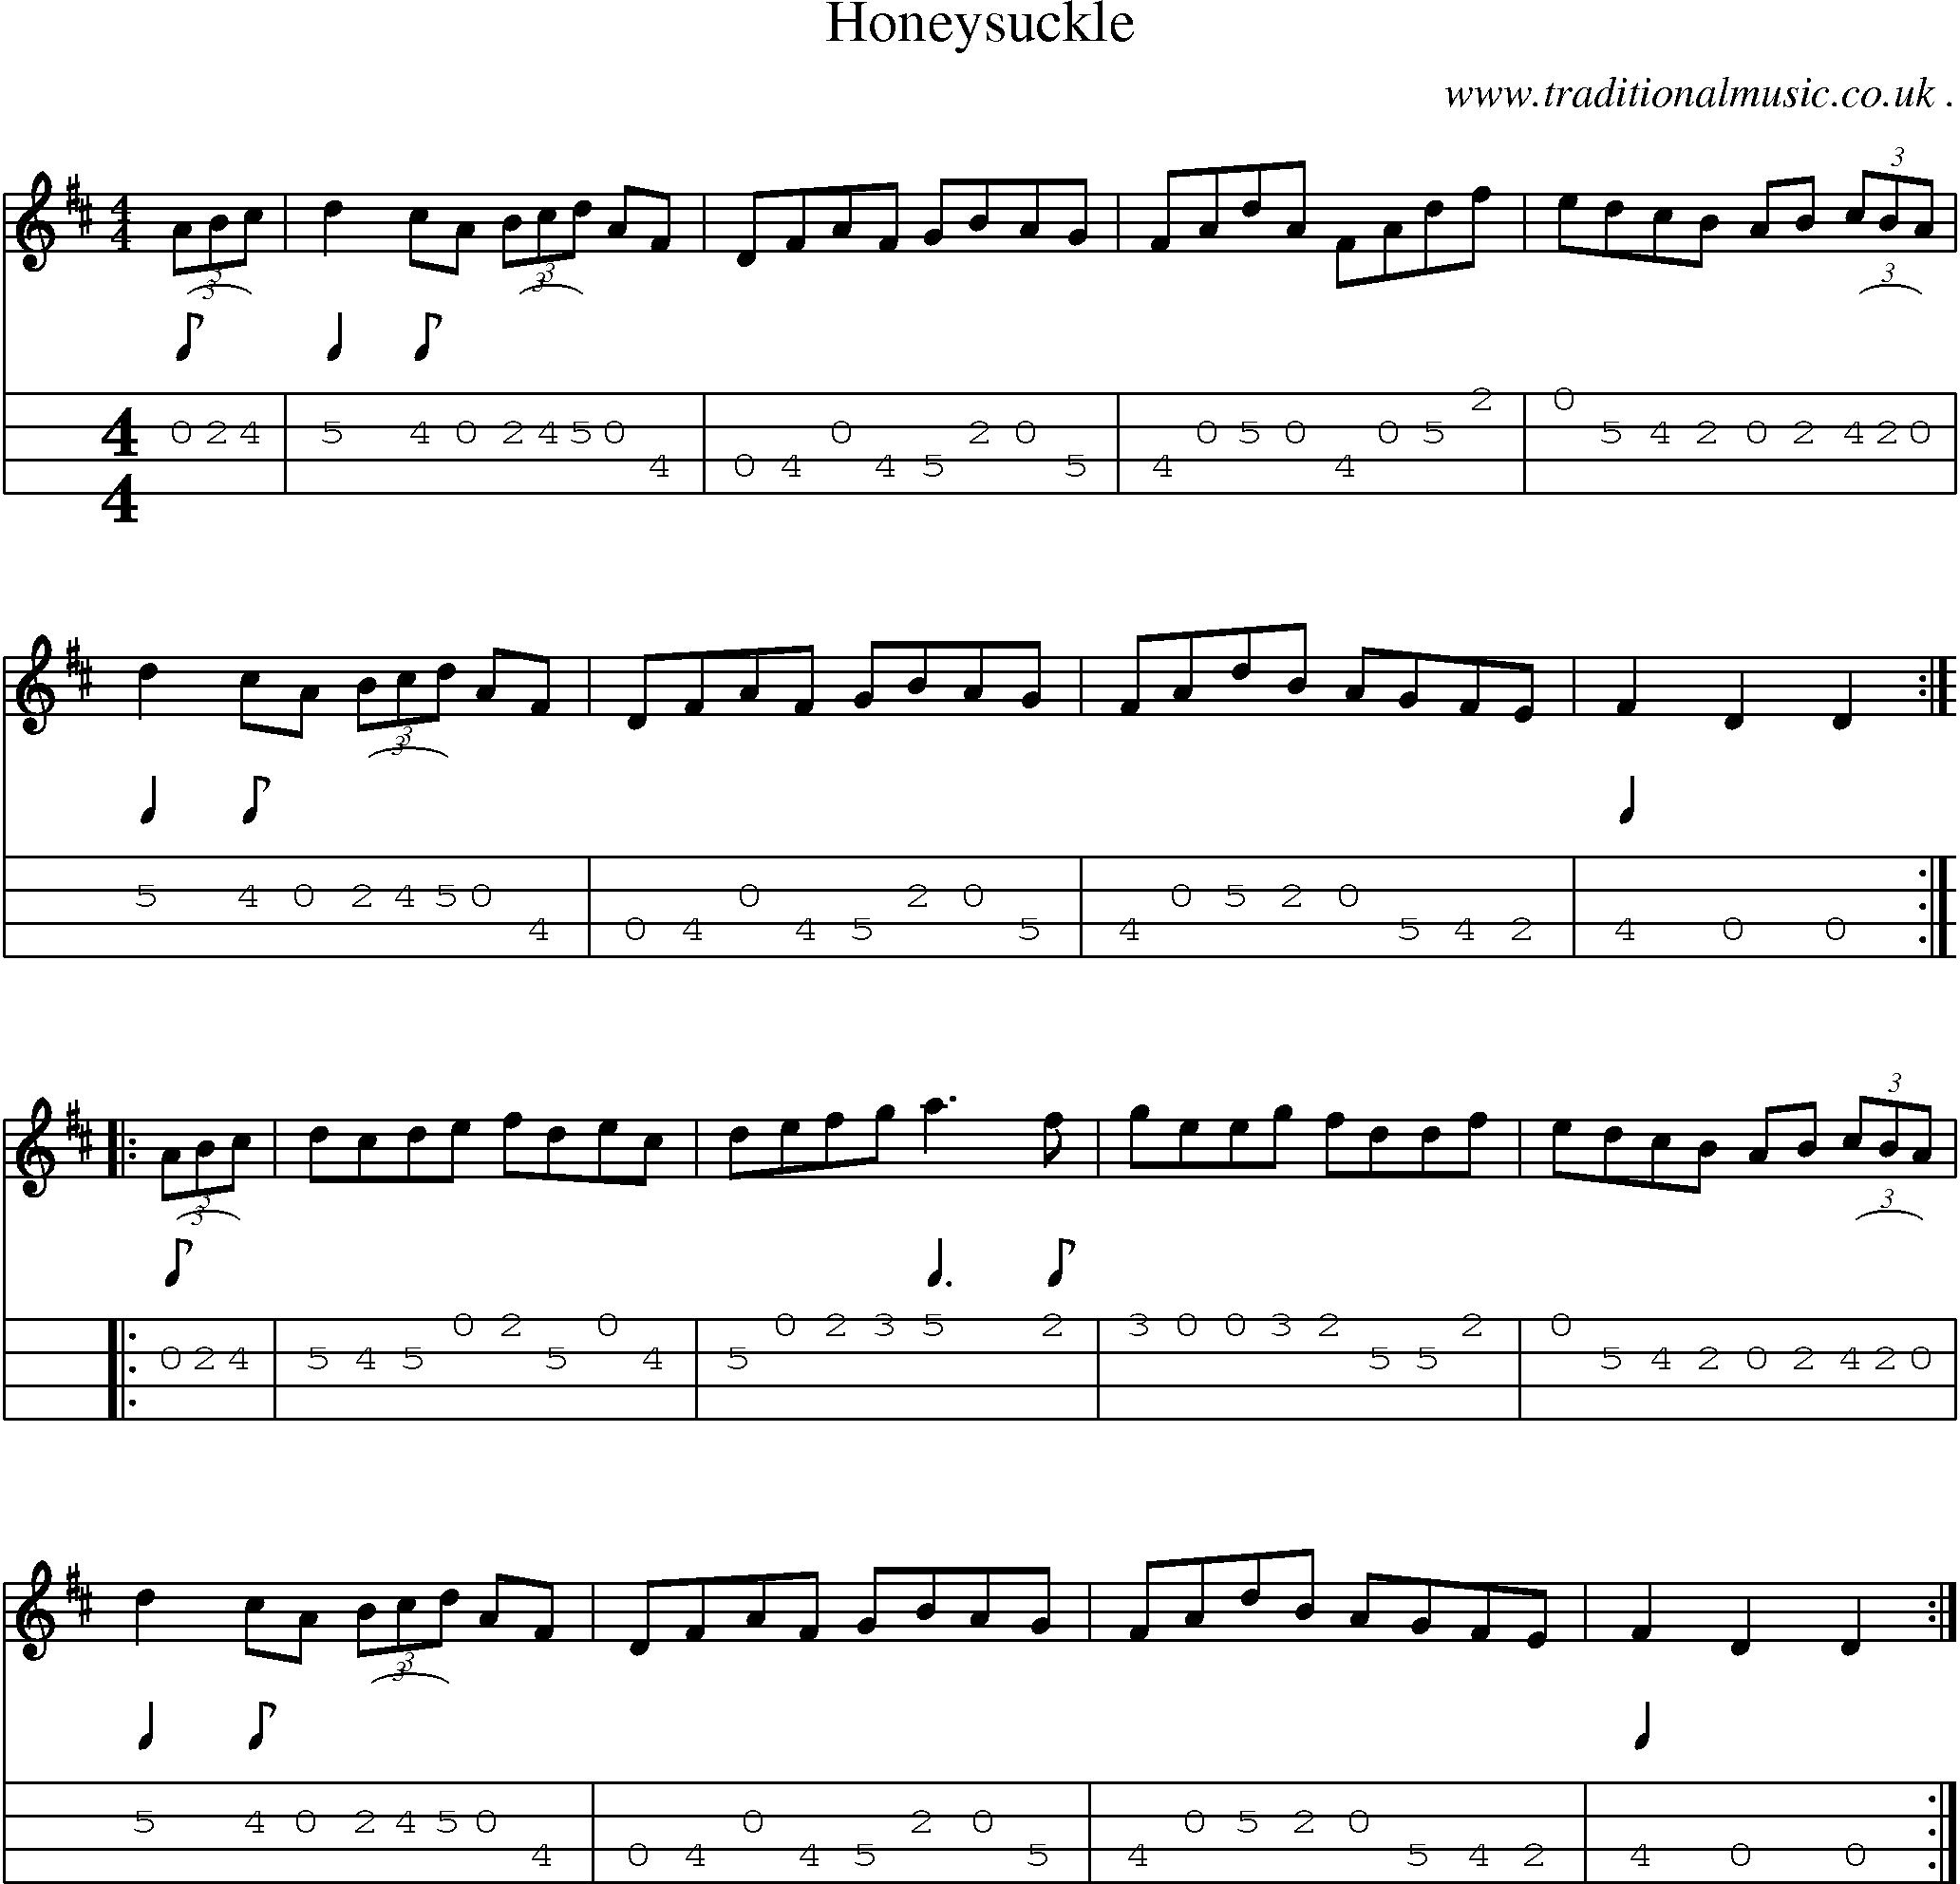 Sheet-Music and Mandolin Tabs for Honeysuckle